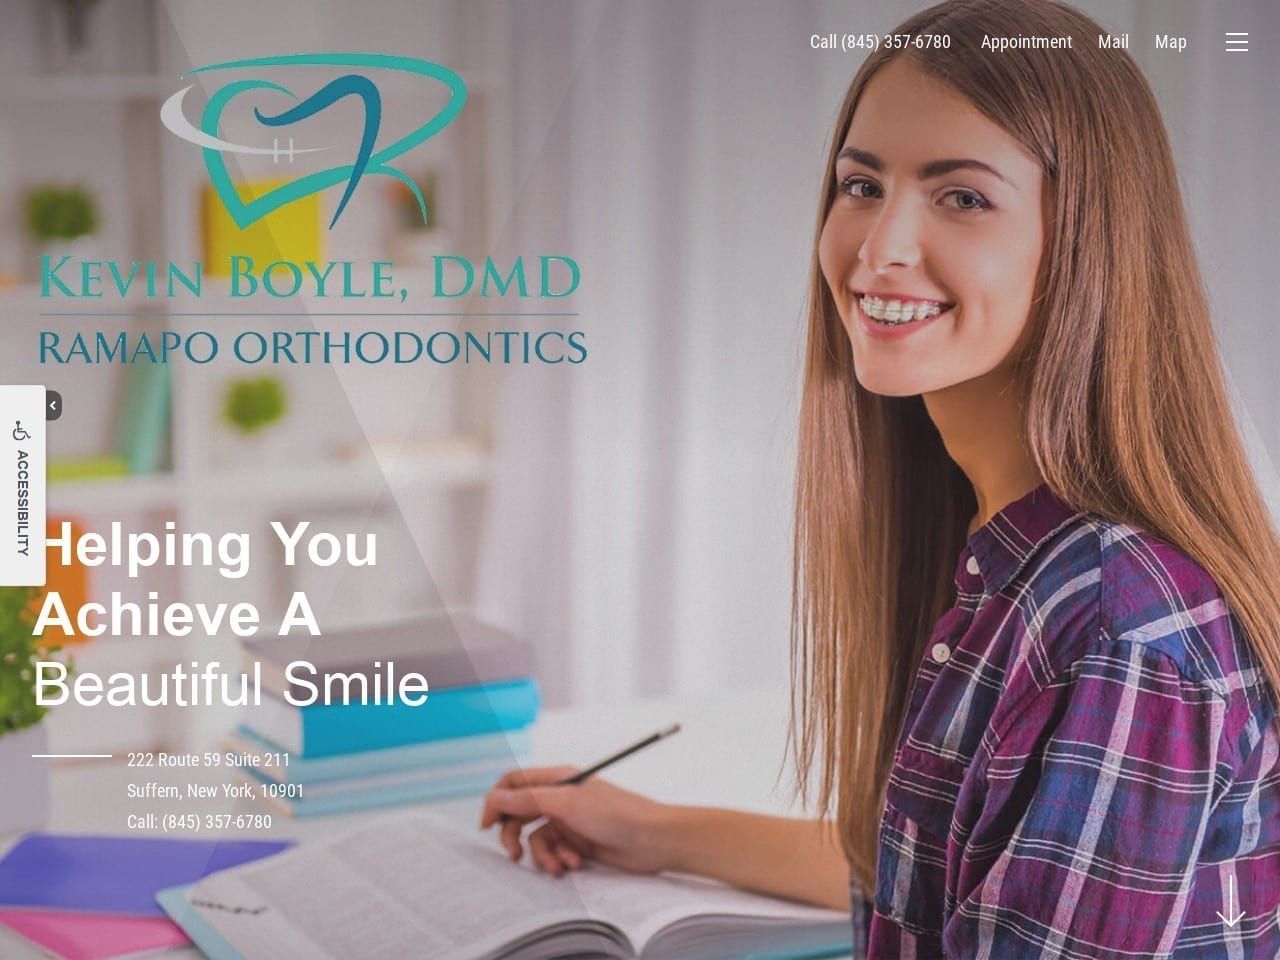 Ramapo Orthodontics Pllc Website Screenshot from boyleorthodontics.com